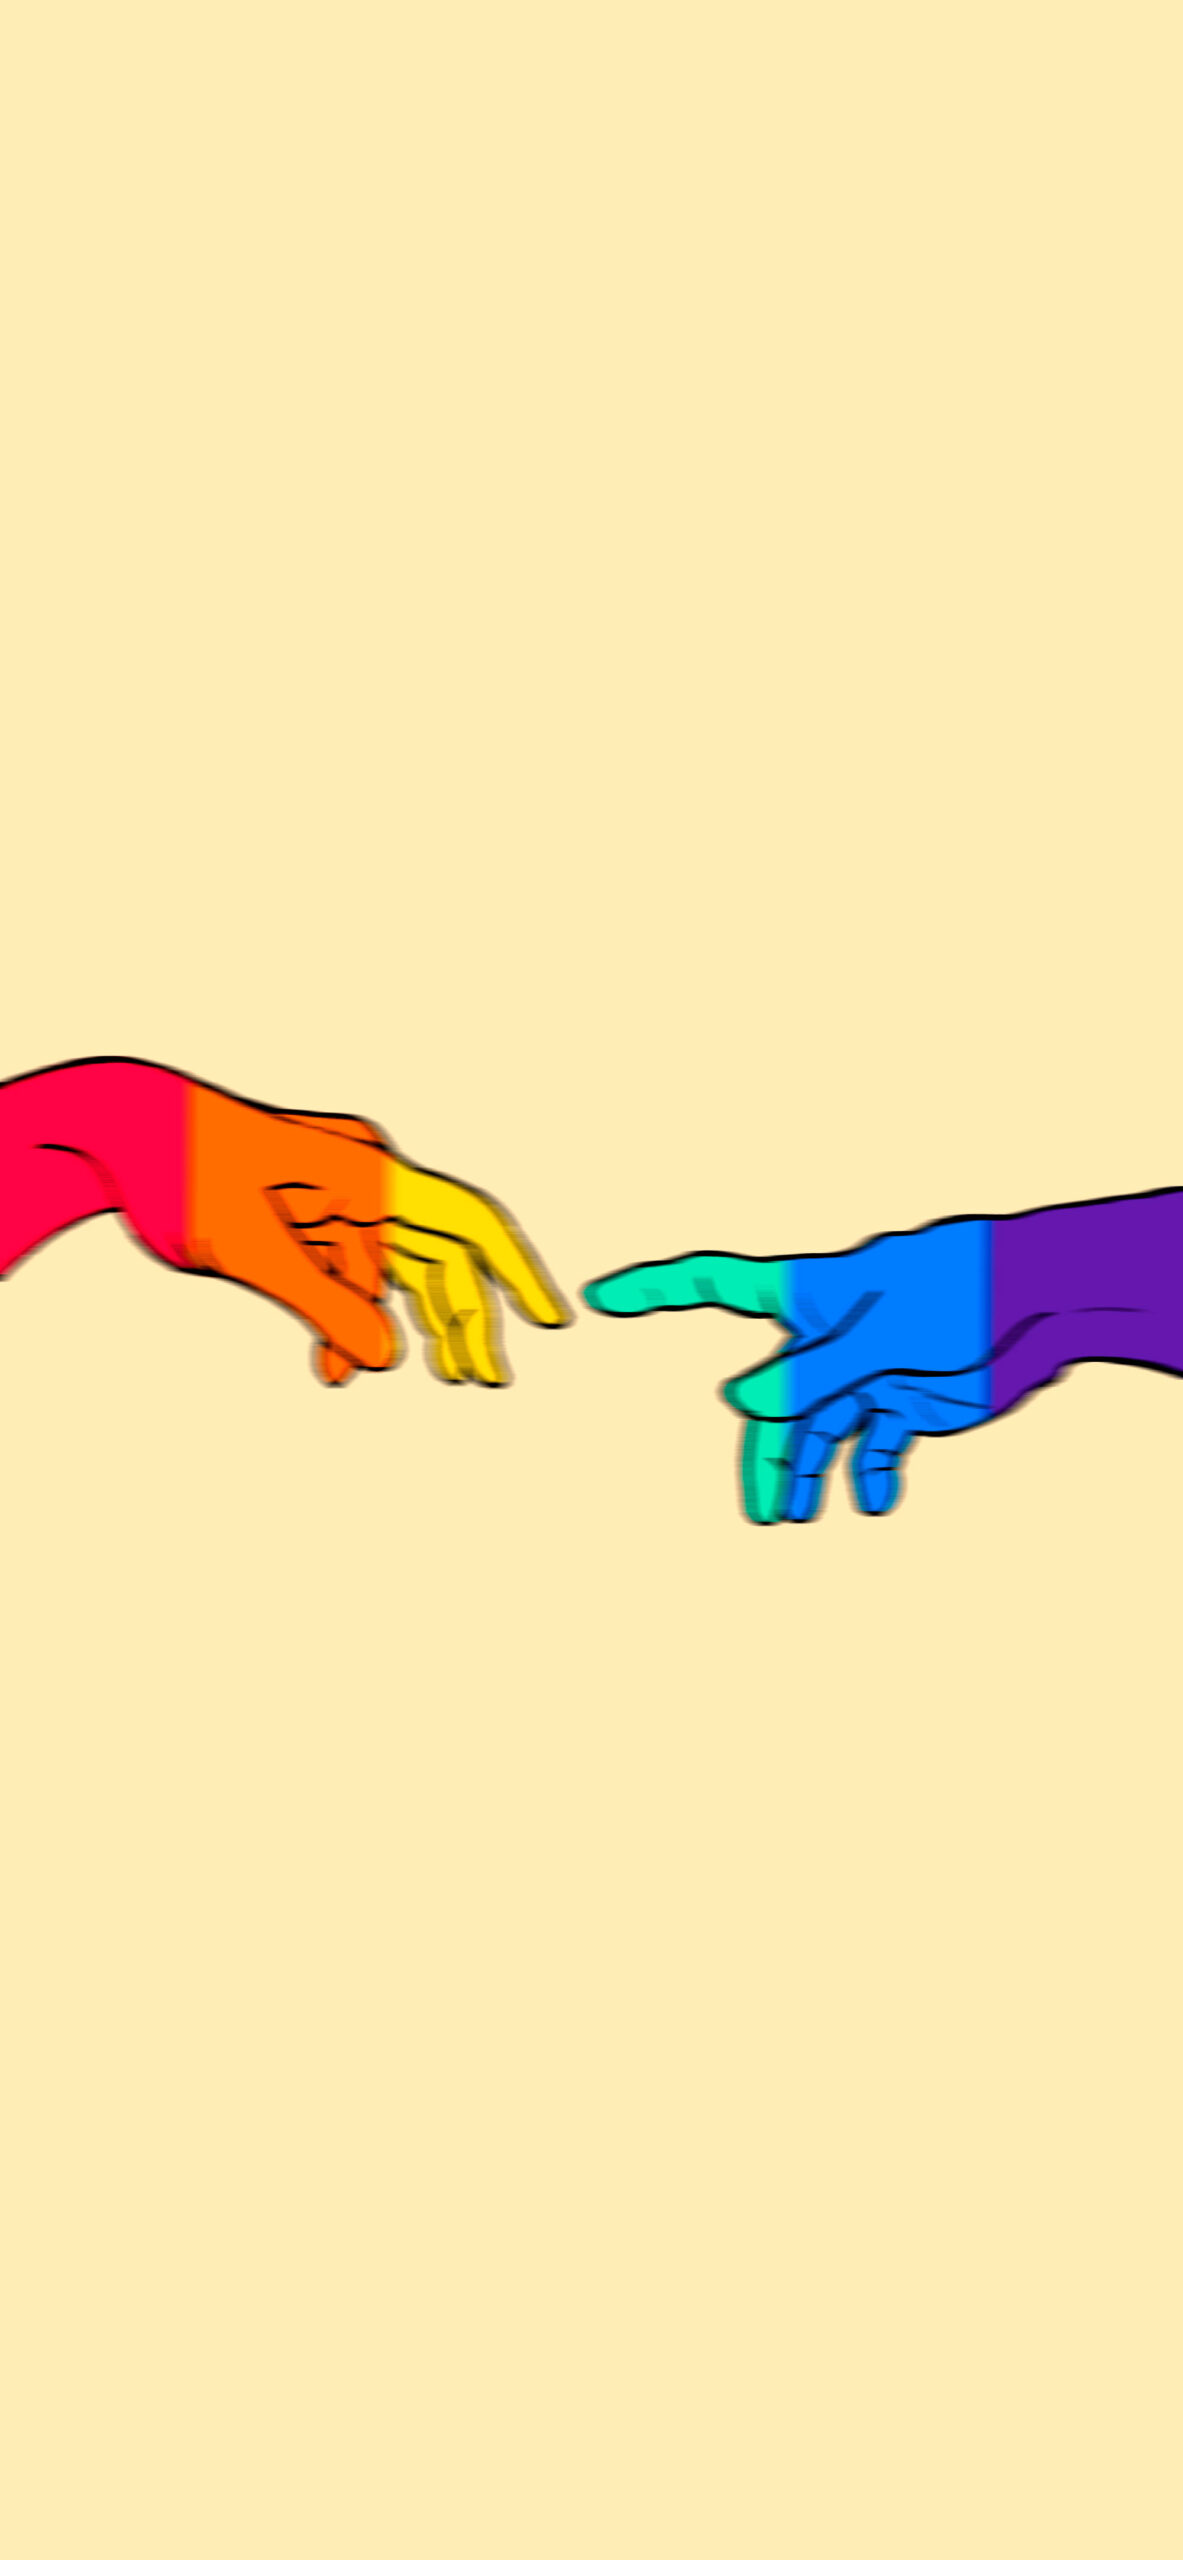 the creation of adam pride rainbow hands blur wallpaper